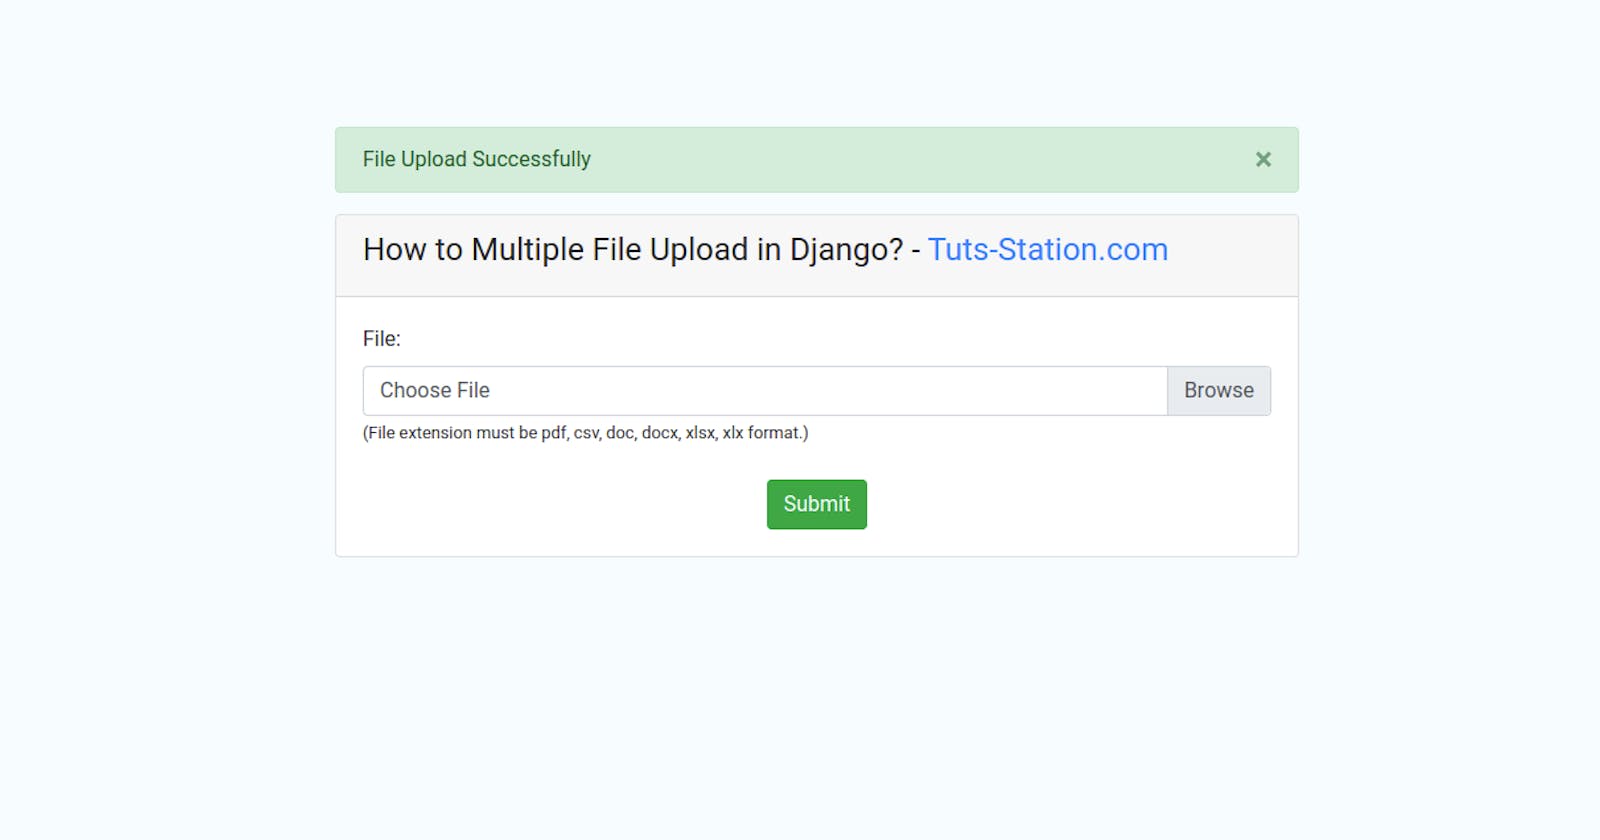 How to Upload Multiple Files in Django?